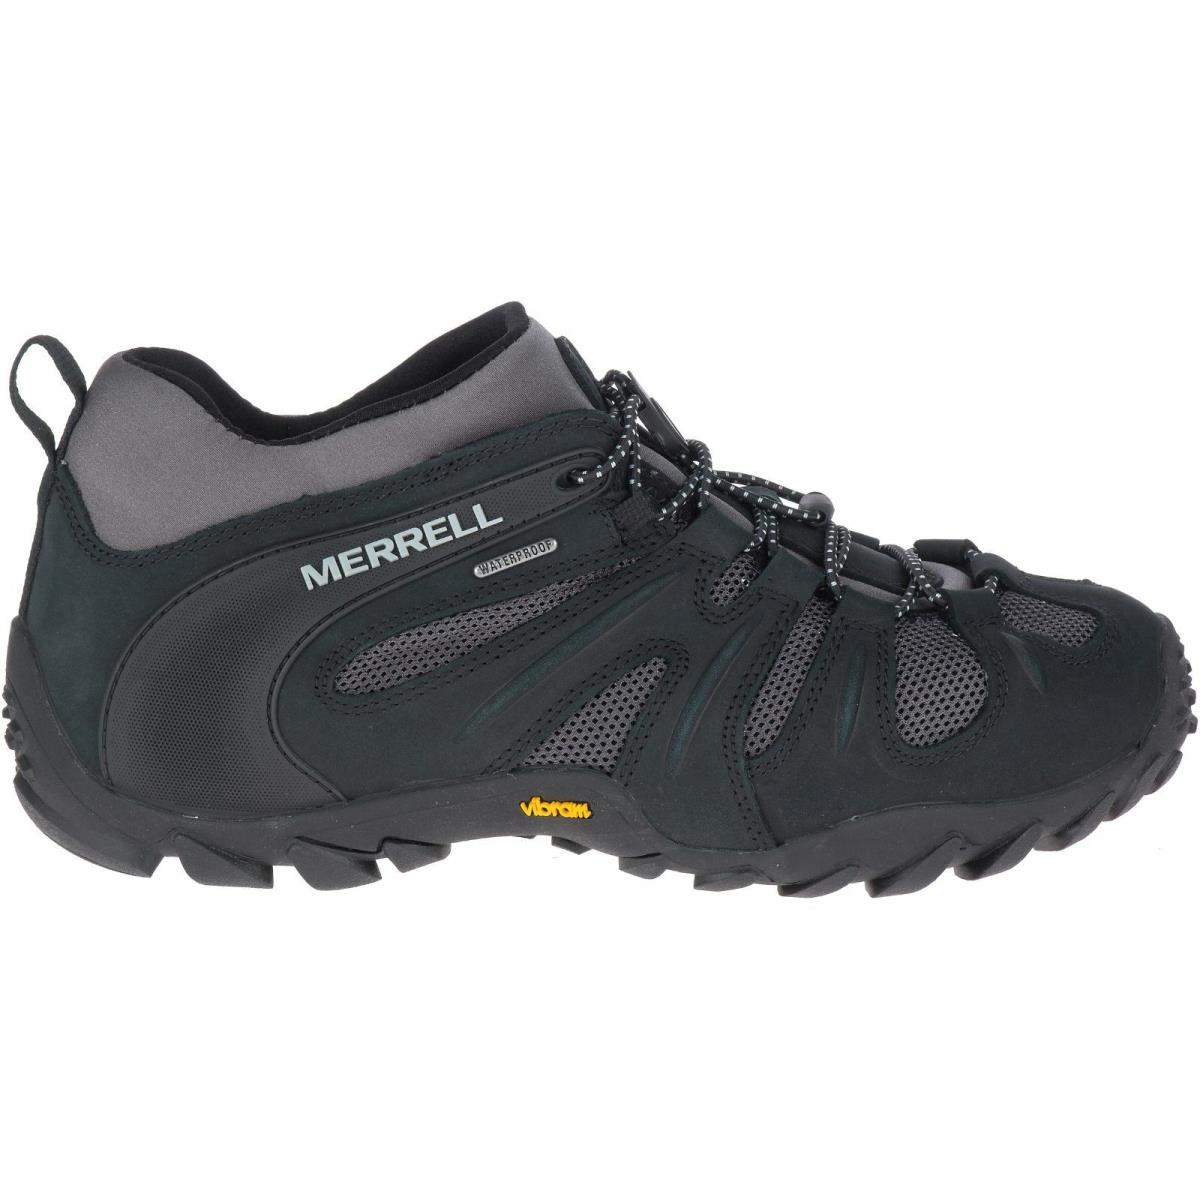 Merrell Men`s Waterproof Shock Absorbing Moisture Wicking Hiking Leather Shoes WATERPROOF Black